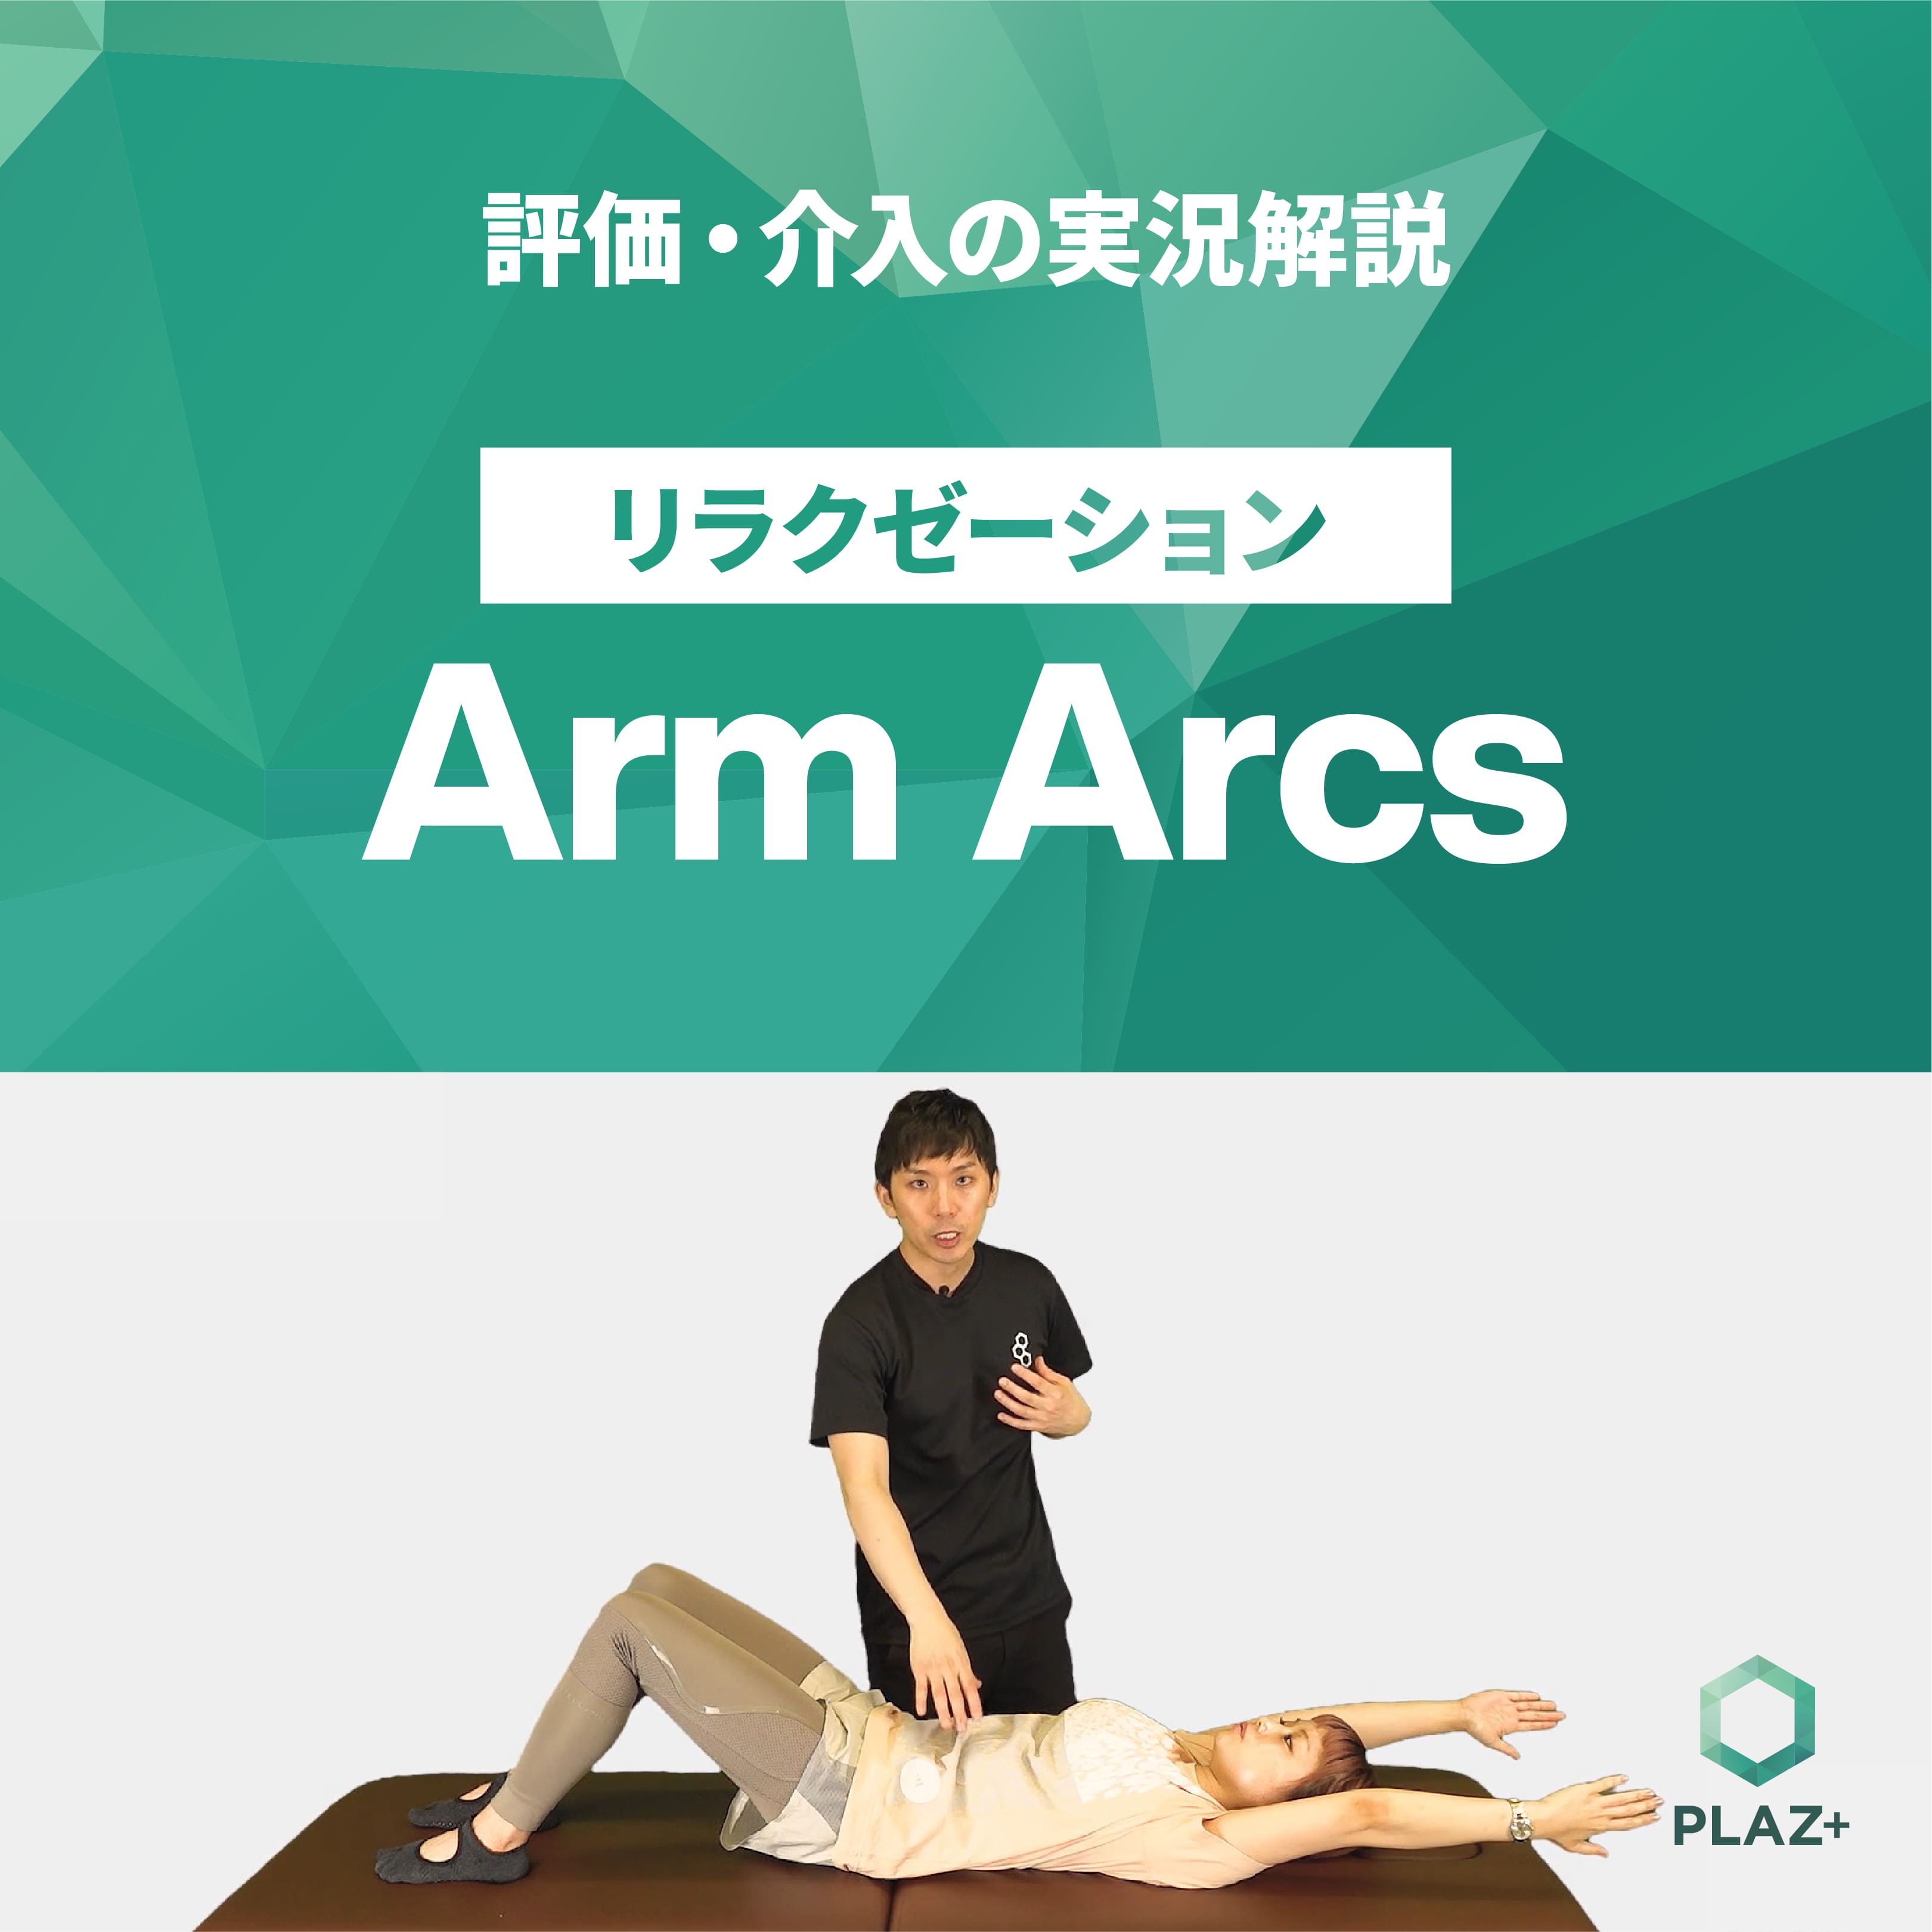 Arm Arcs